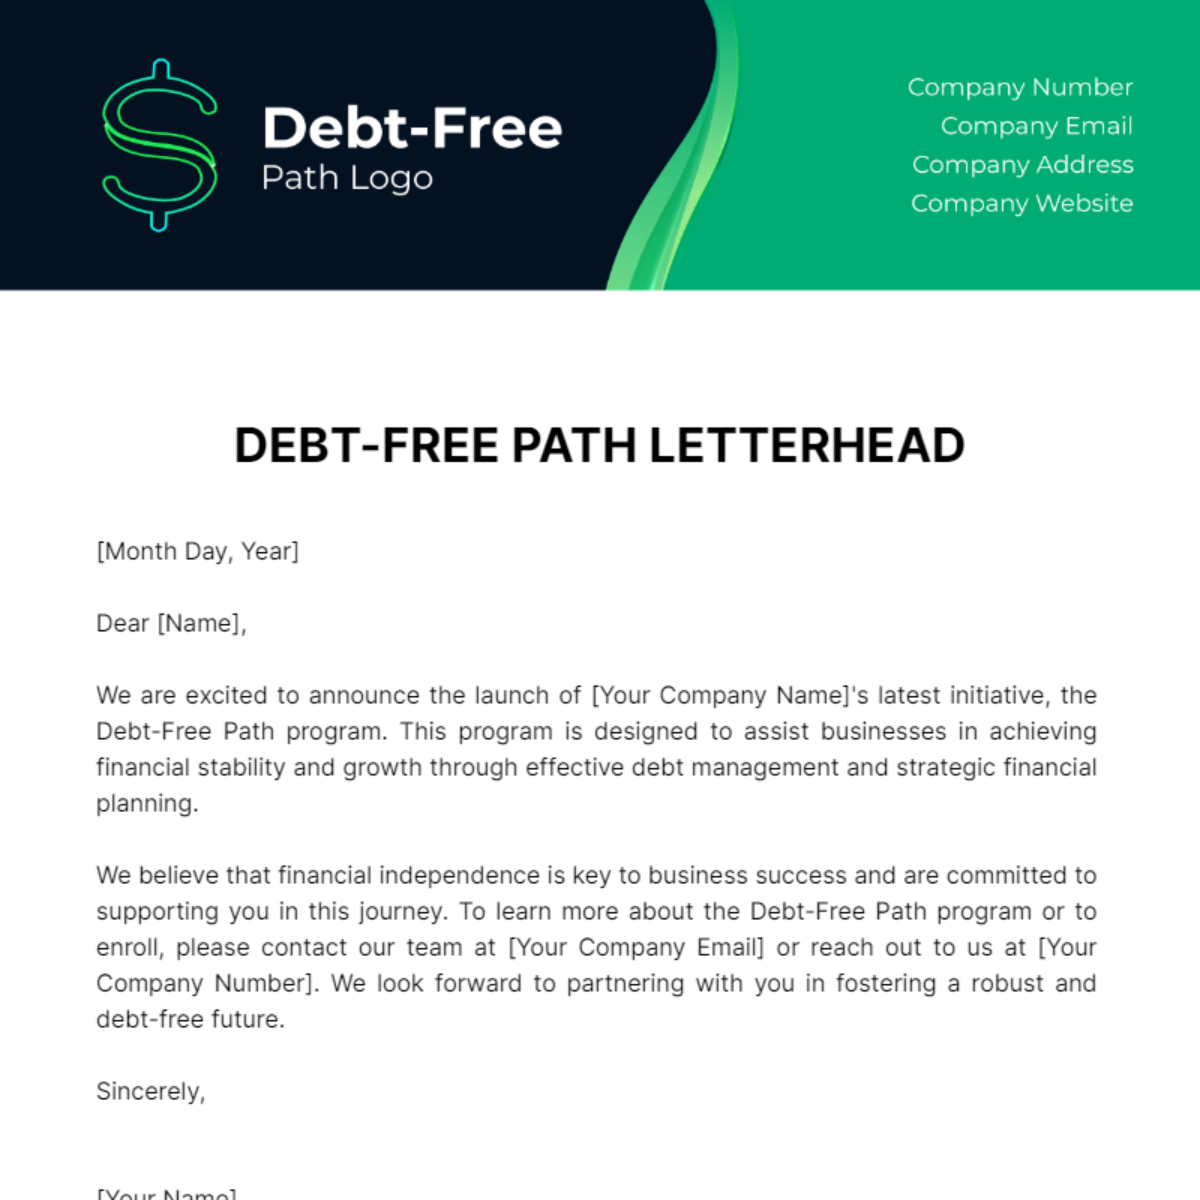 Debt-Free Path Letterhead Template